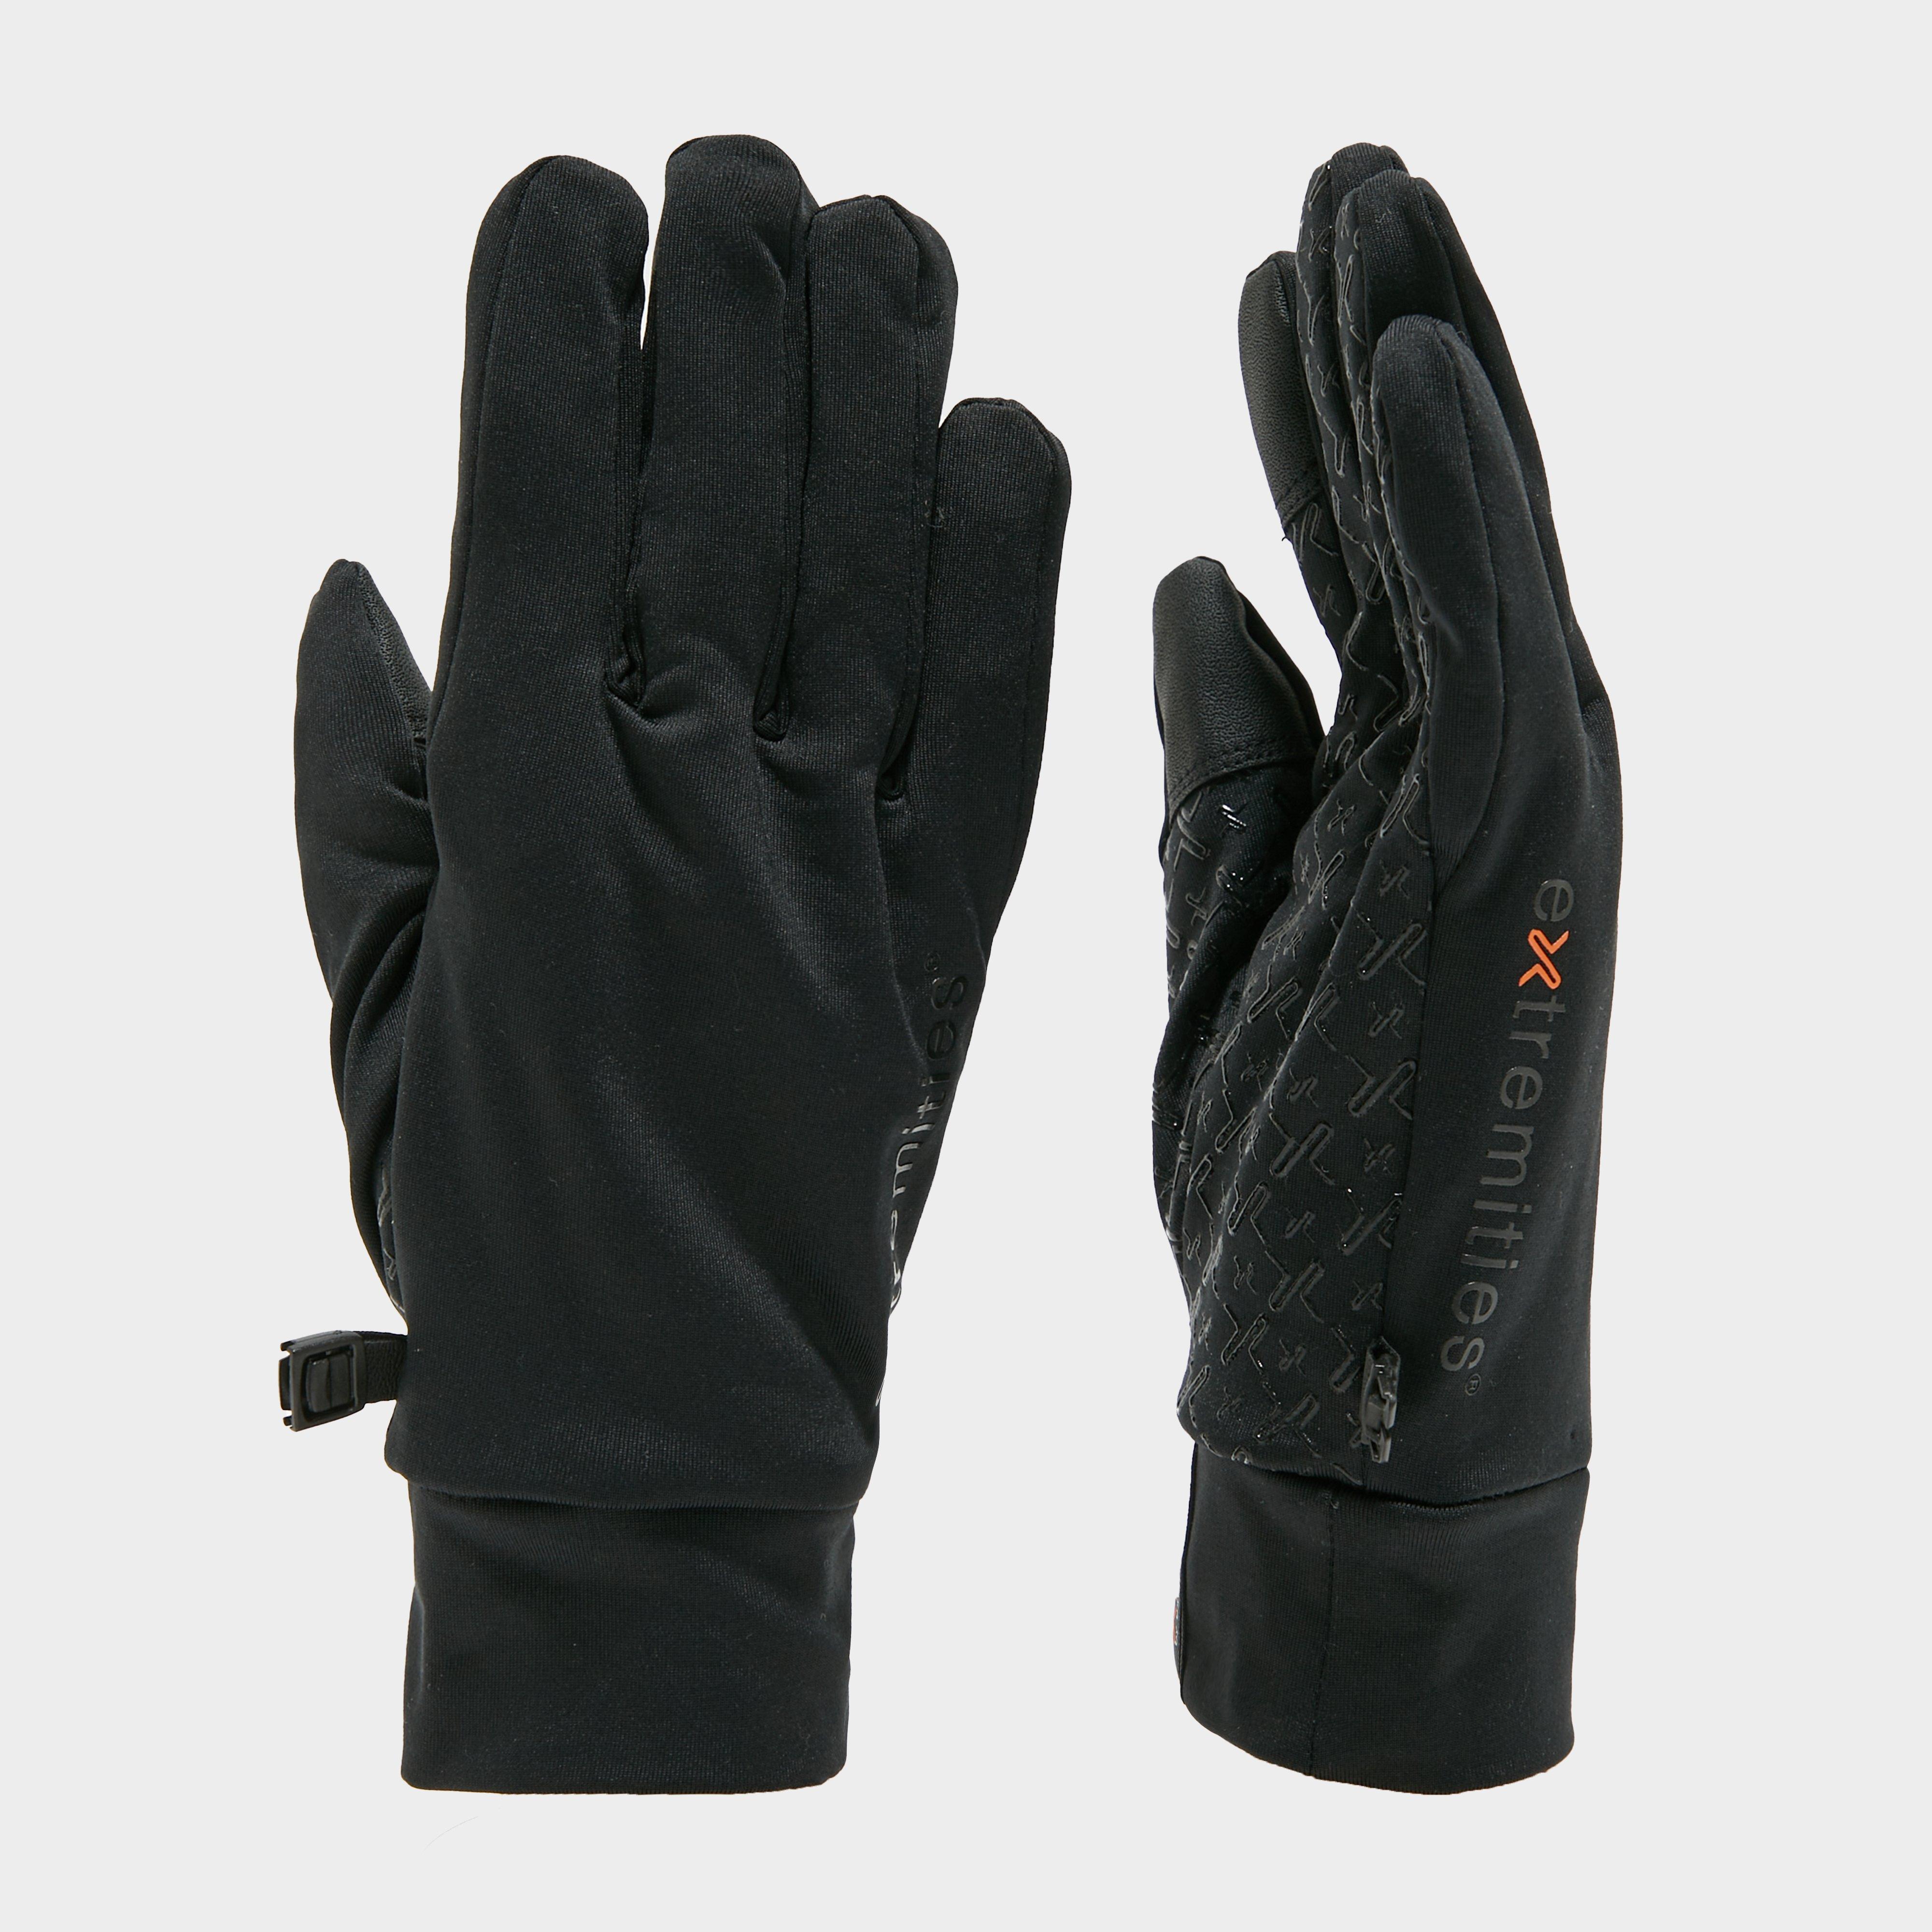  Extremities Waterproof Sticky Power Liner Glove, Black